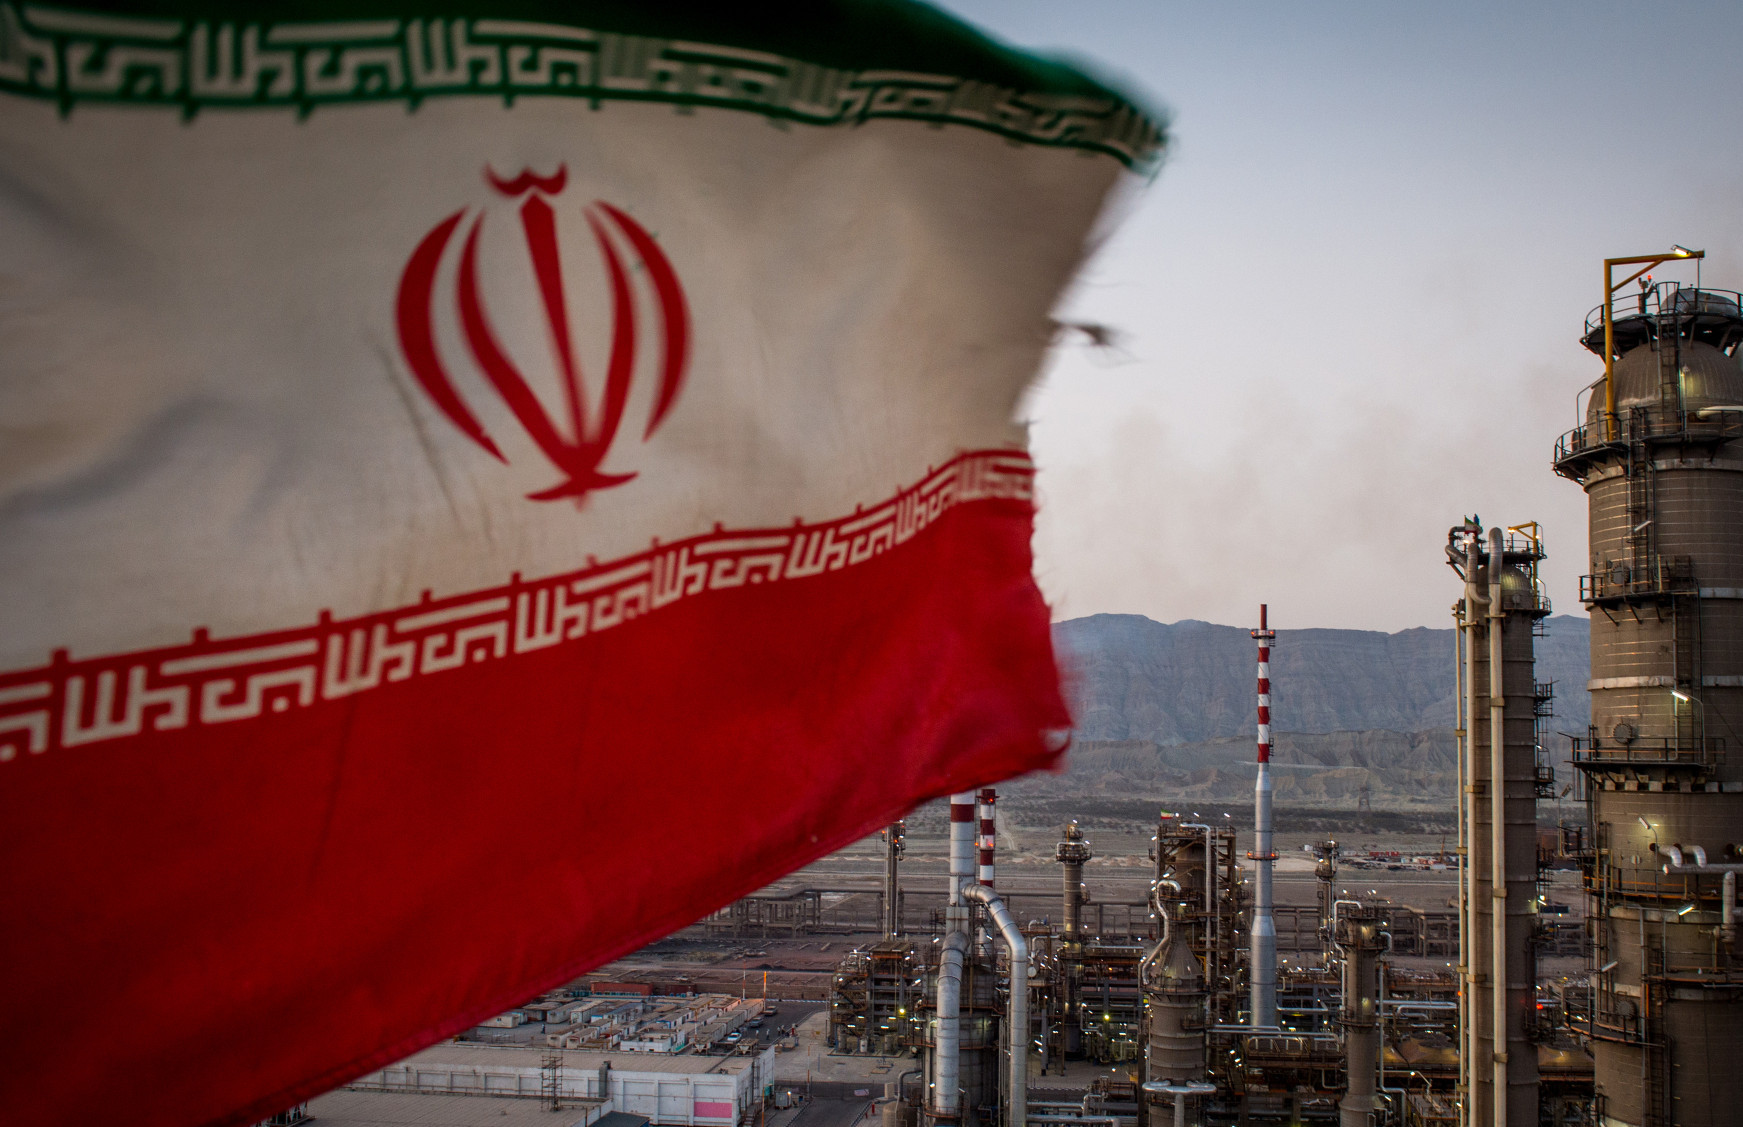 Колку е блиску Иран до нуклеарно оружје?